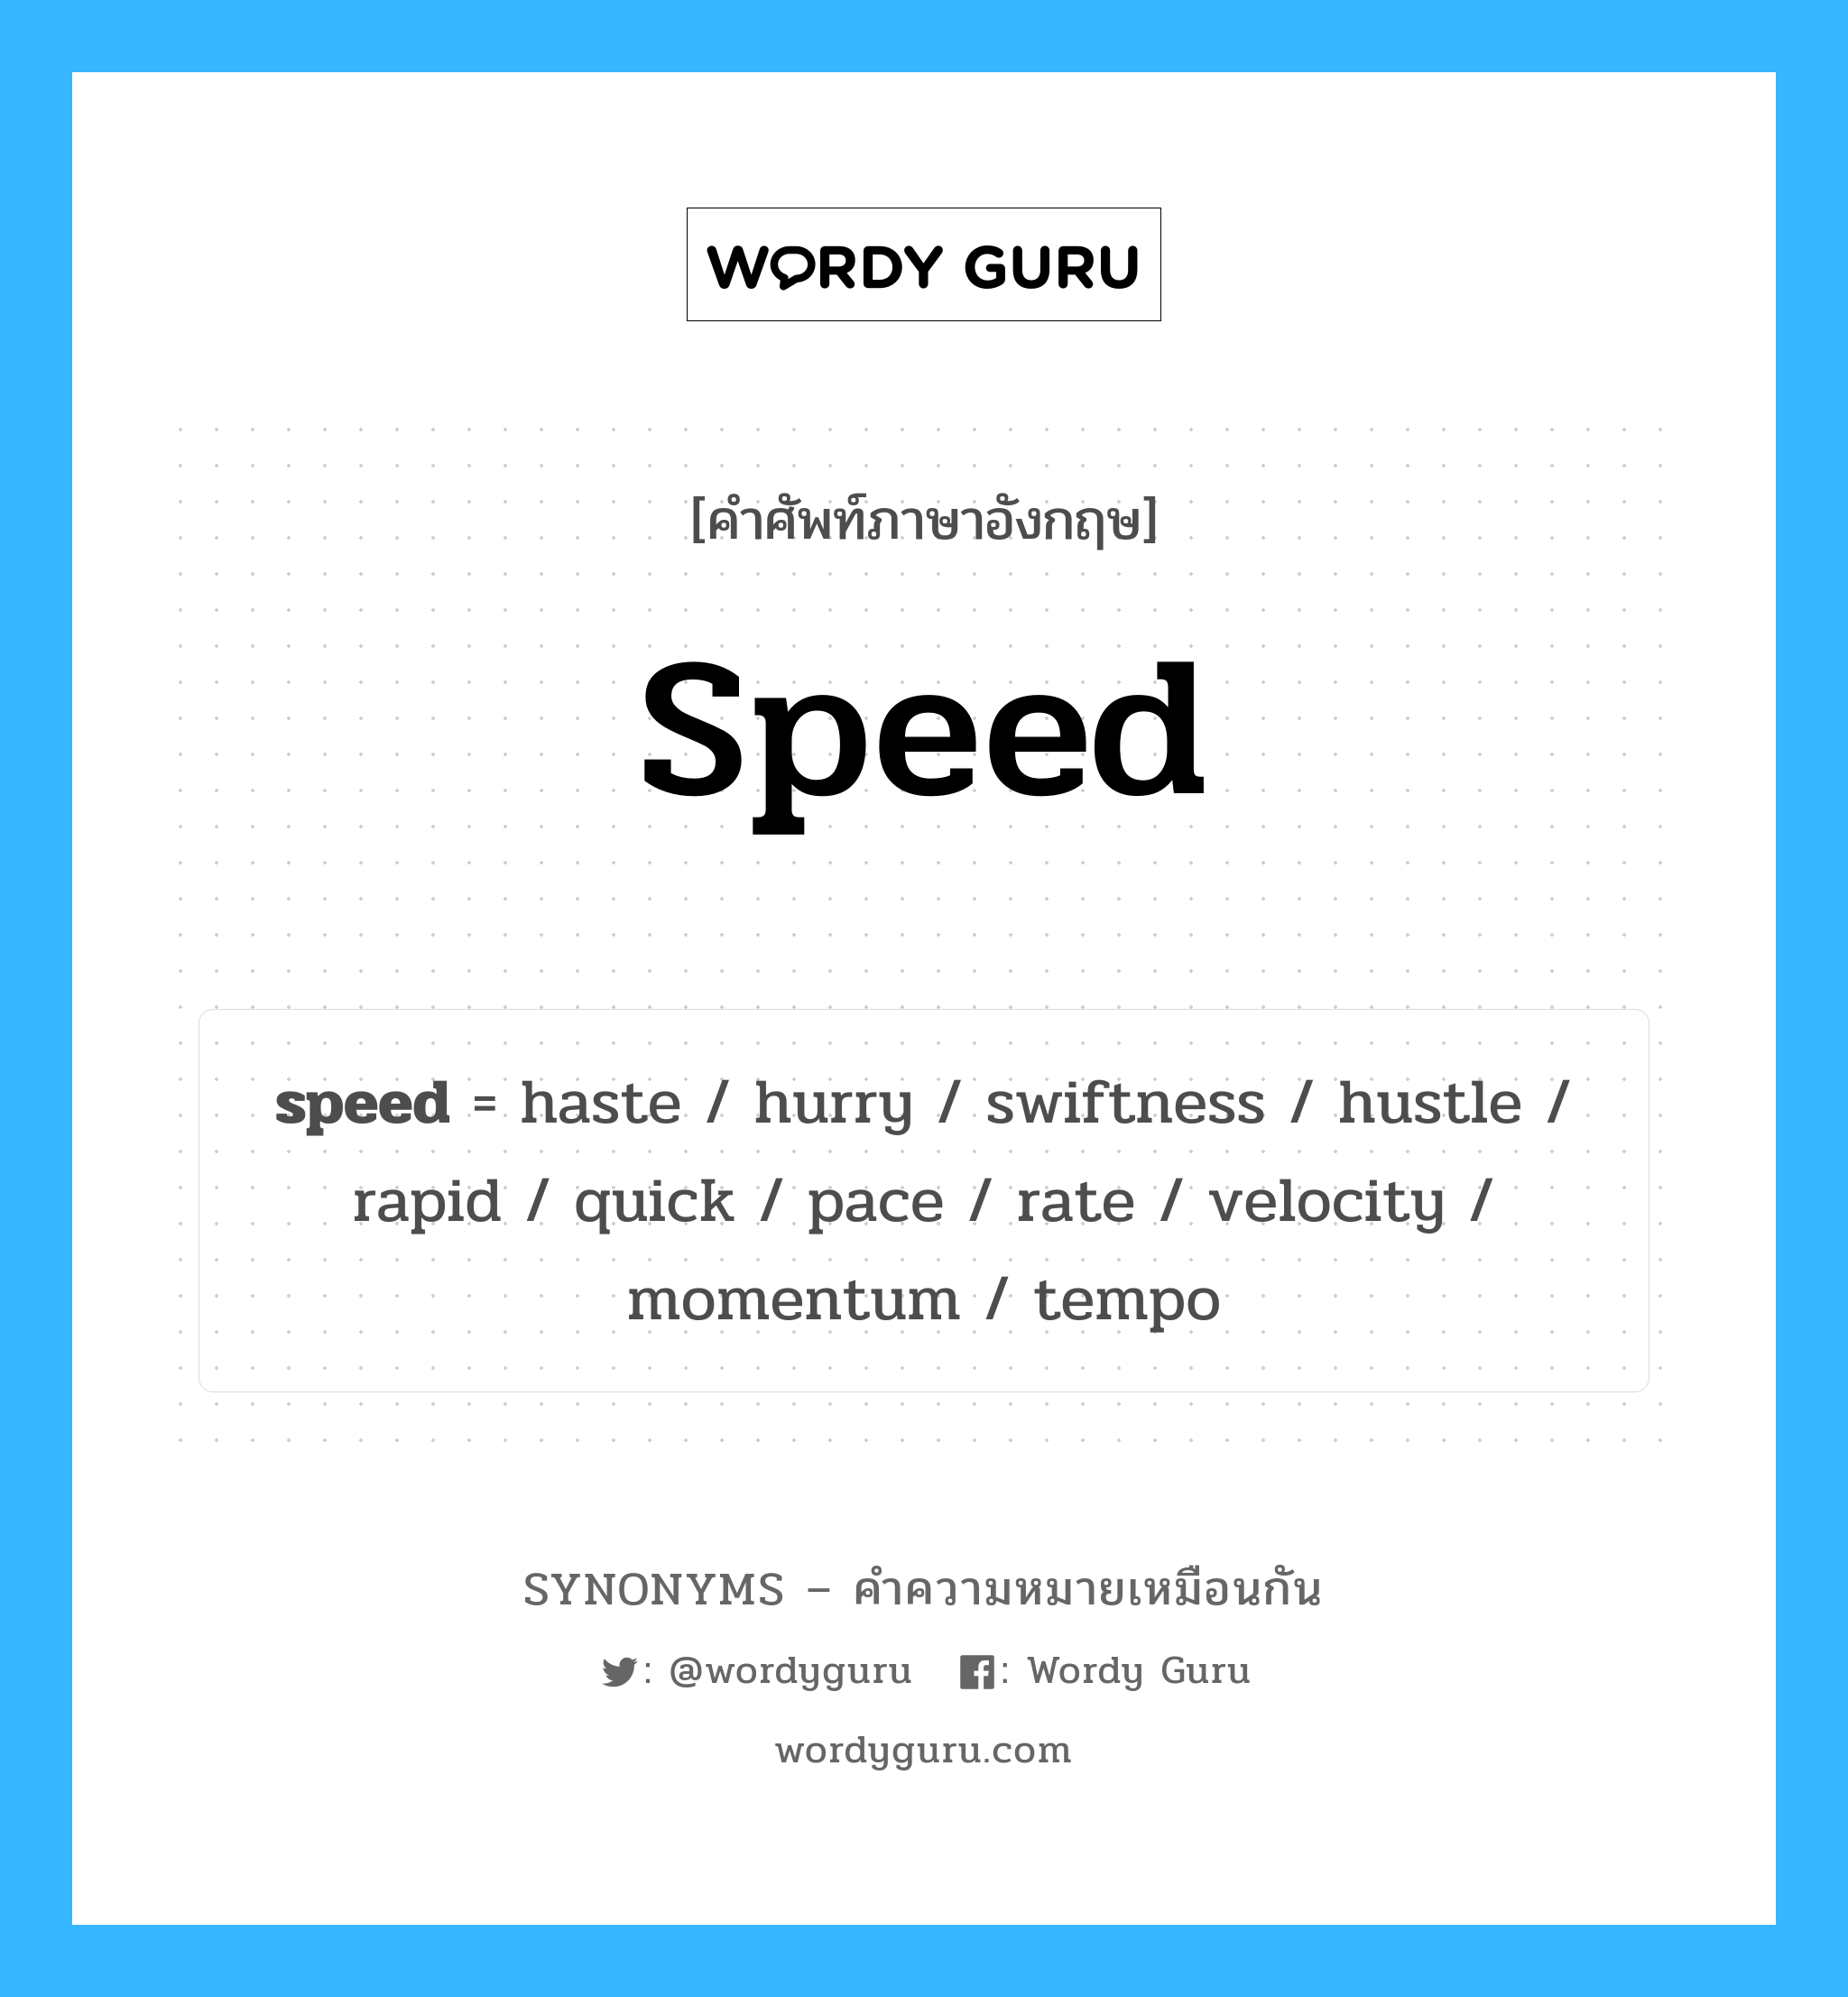 pace เป็นหนึ่งใน speed และมีคำอื่น ๆ อีกดังนี้, คำศัพท์ภาษาอังกฤษ pace ความหมายคล้ายกันกับ speed แปลว่า ก้าว หมวด speed